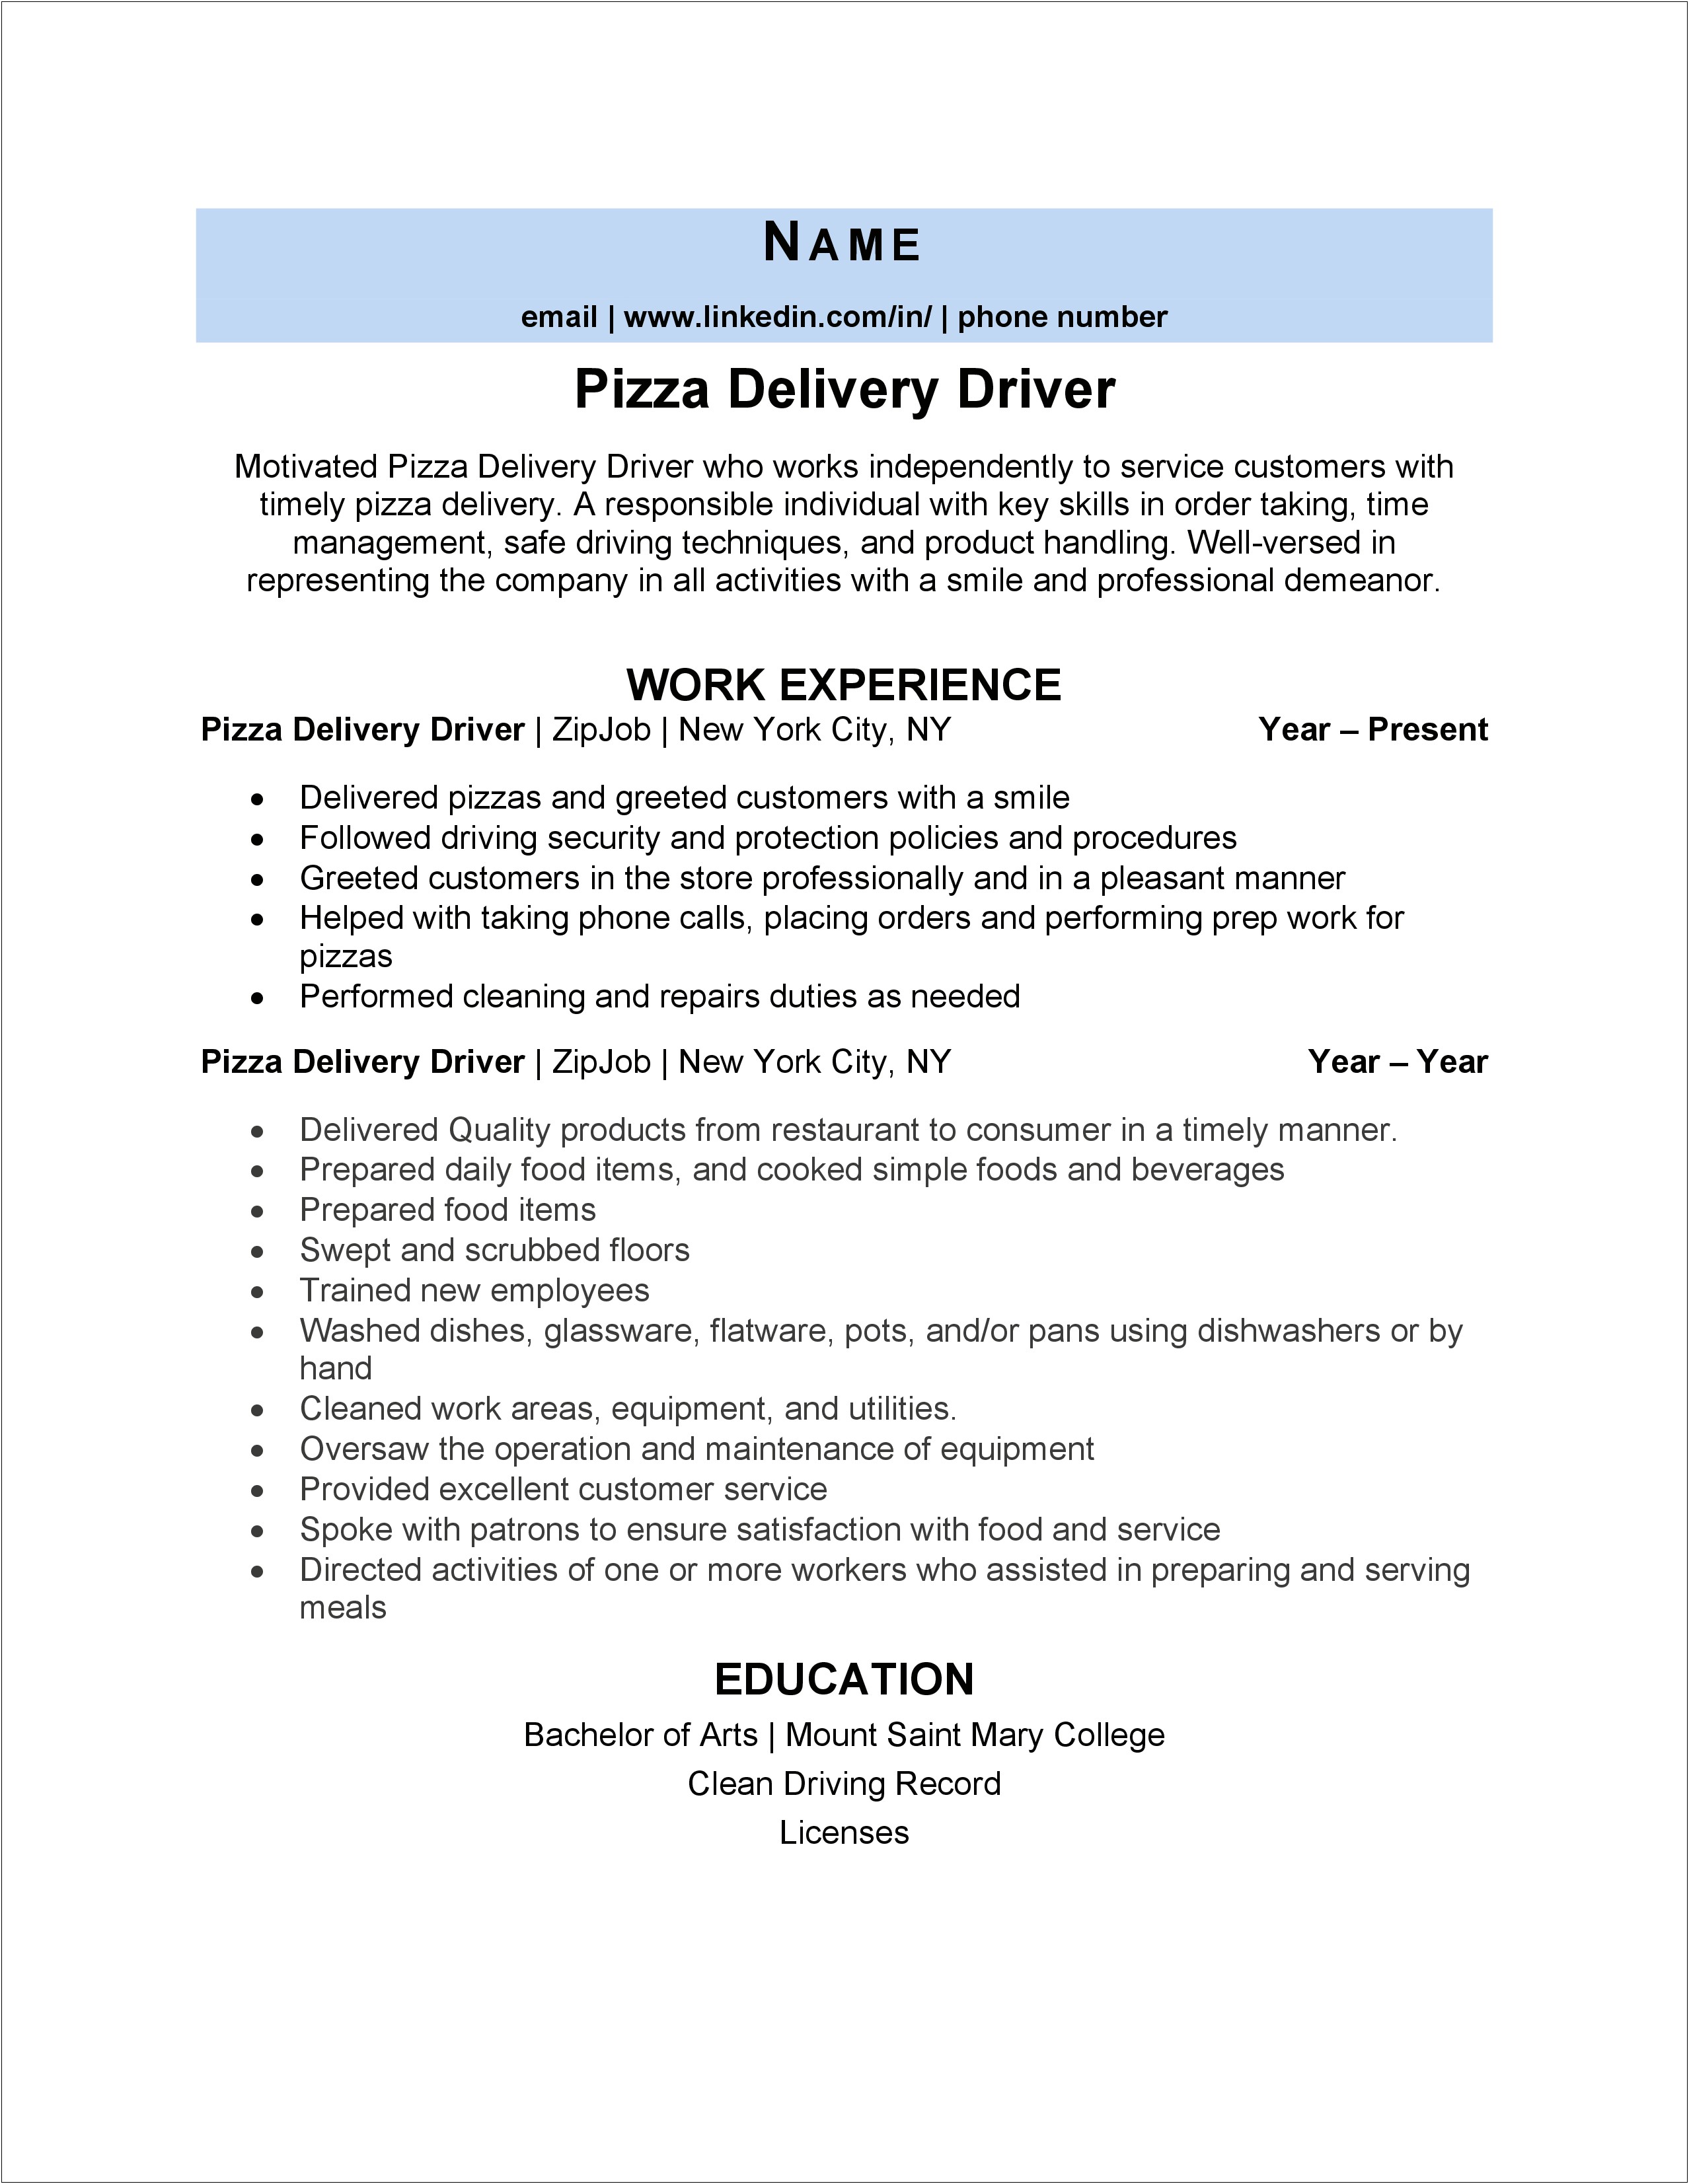 Resume Job Description For Delivery Driver